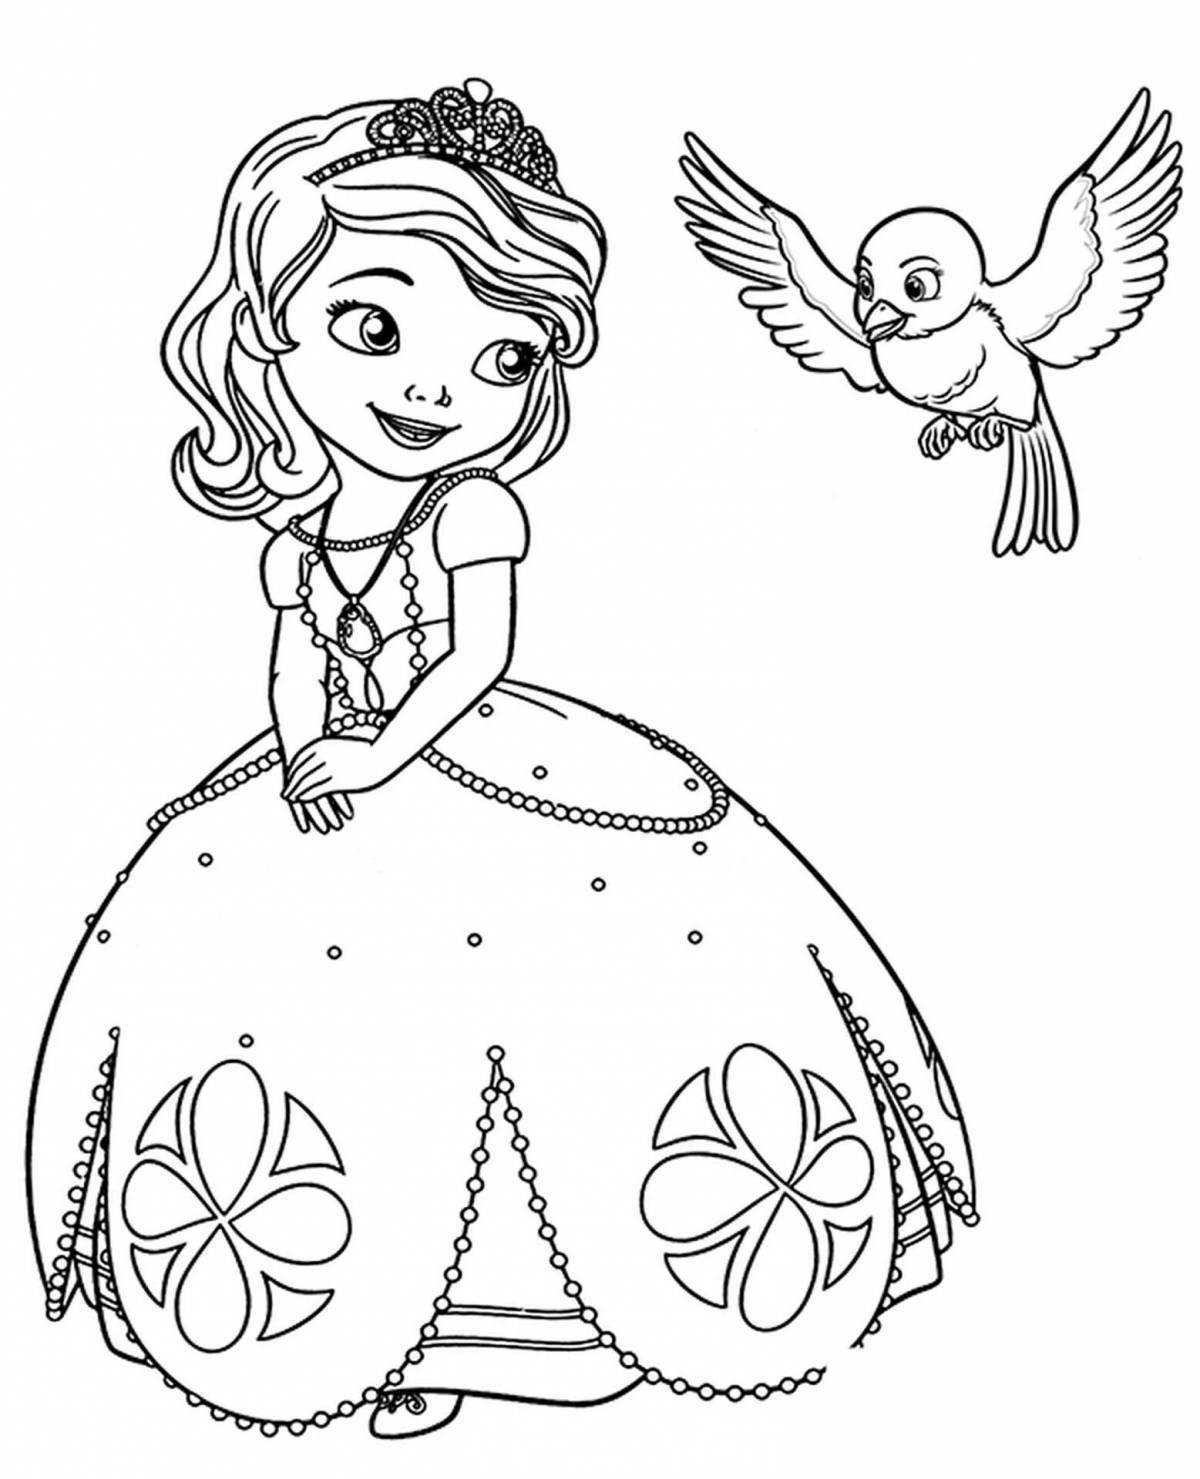 Charming princess sofia coloring book for girls